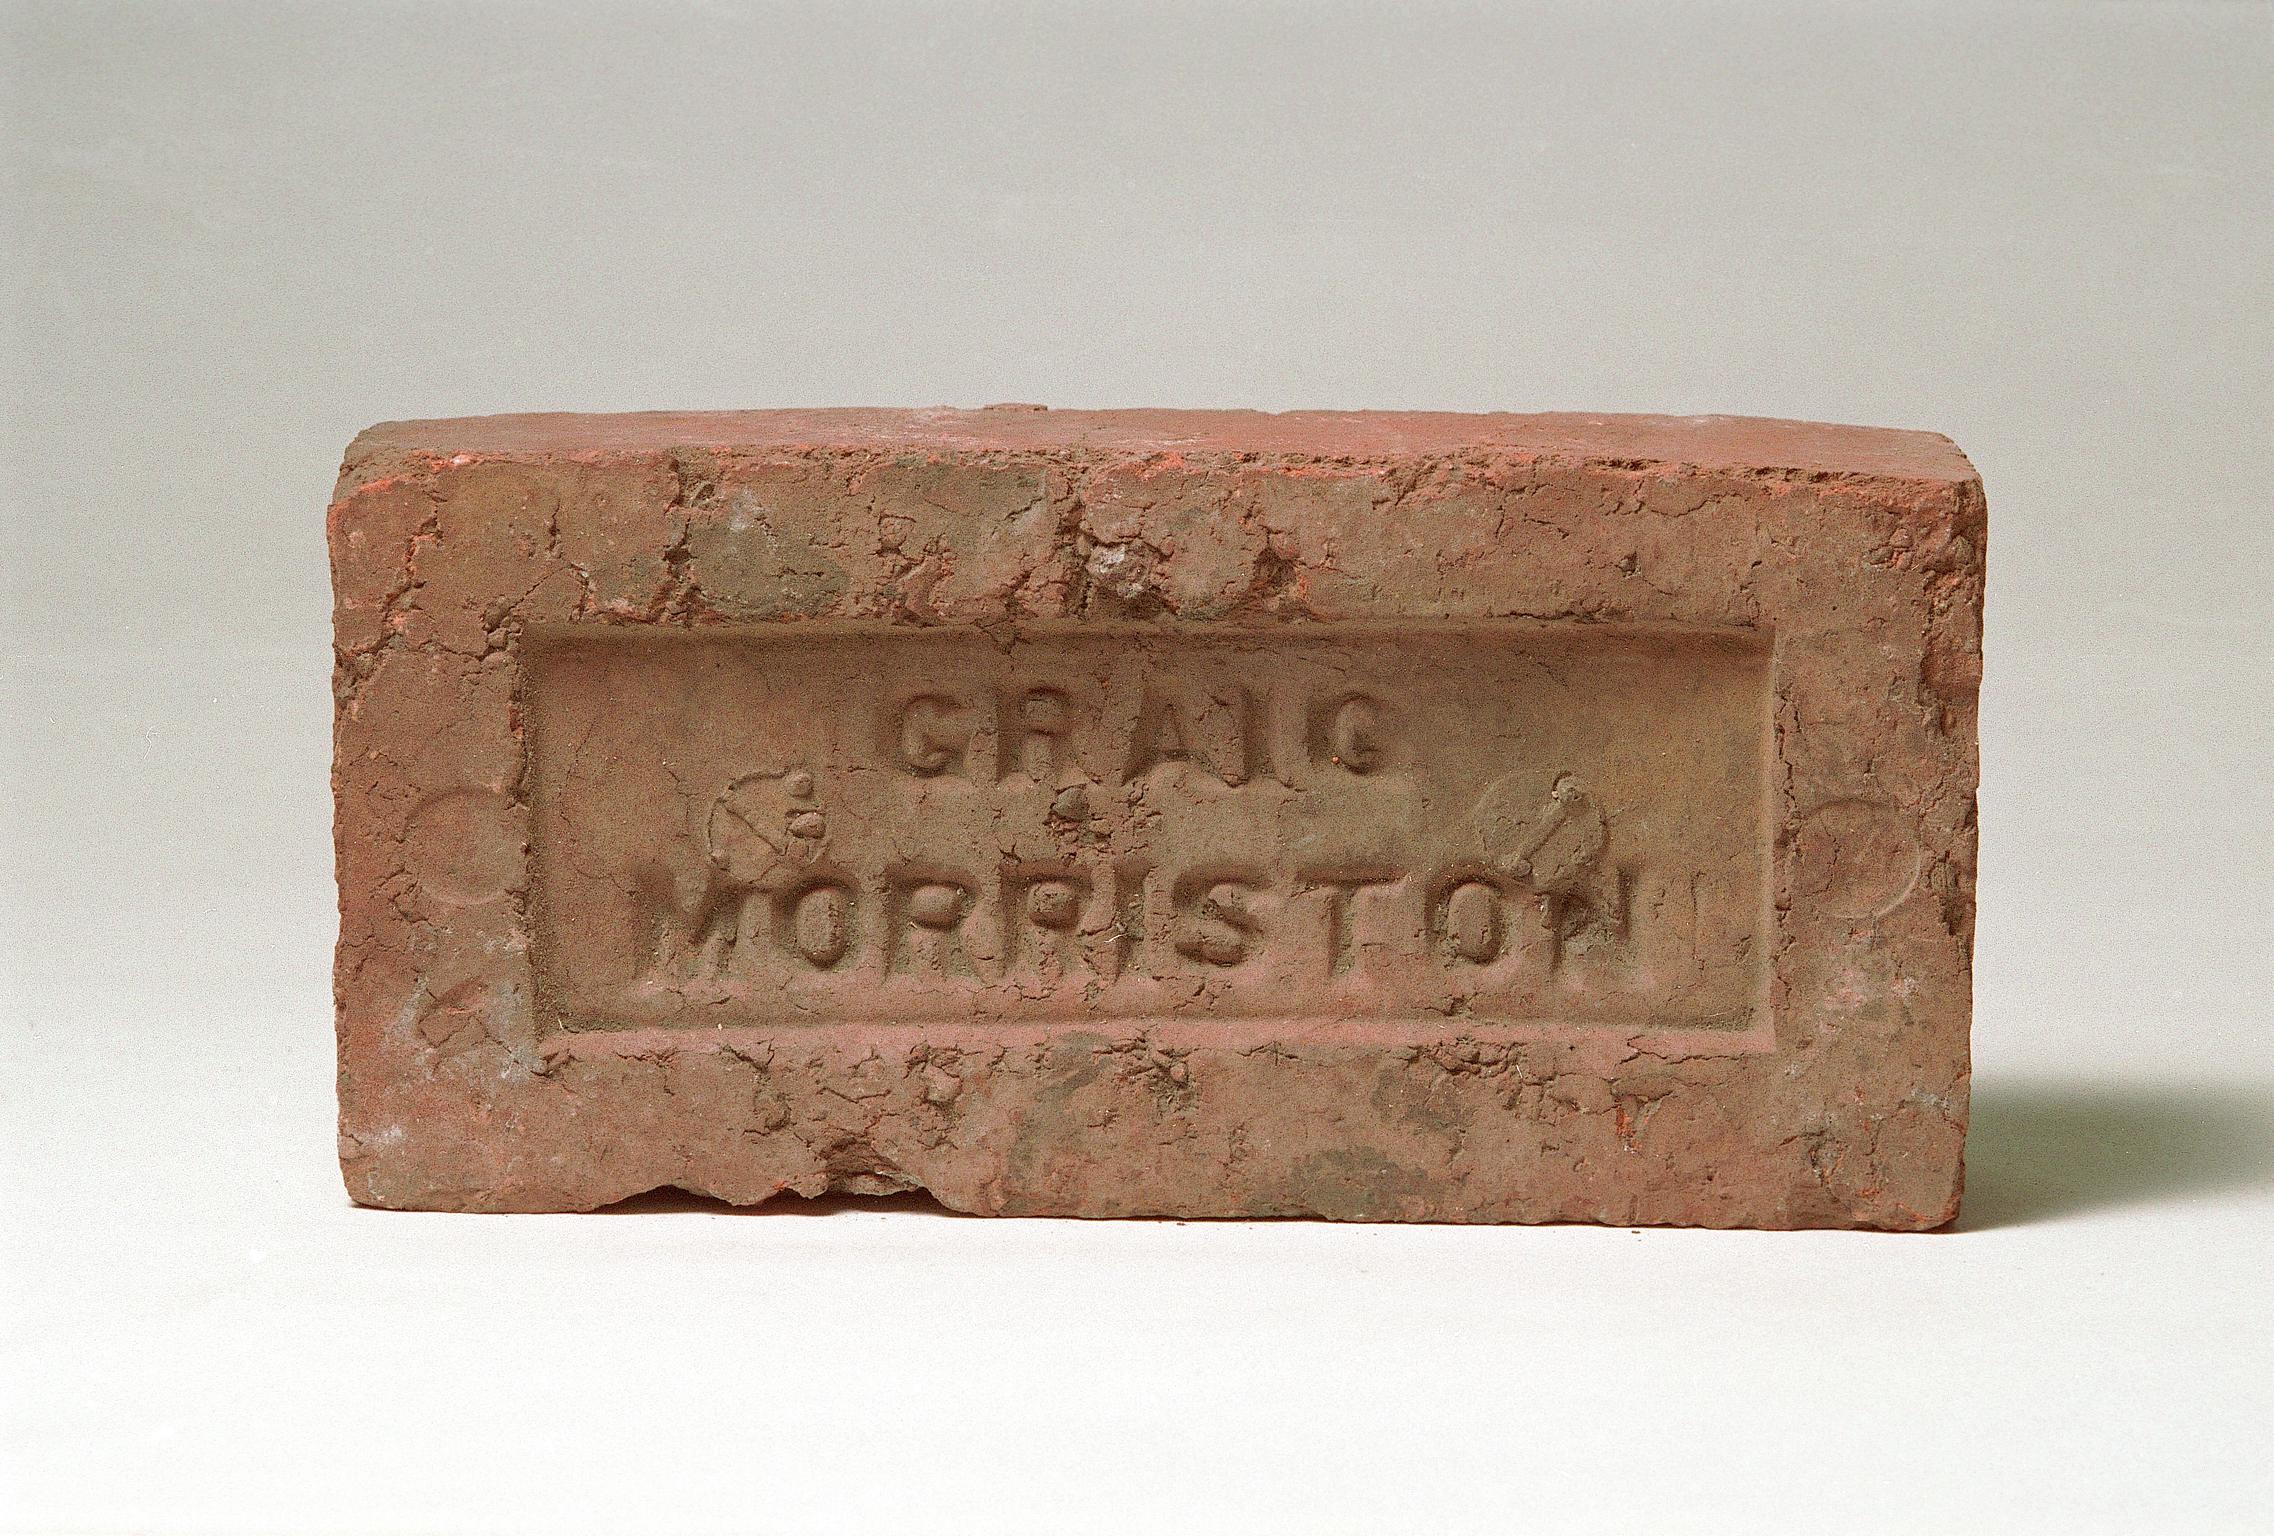 Graig Brick Co., brick